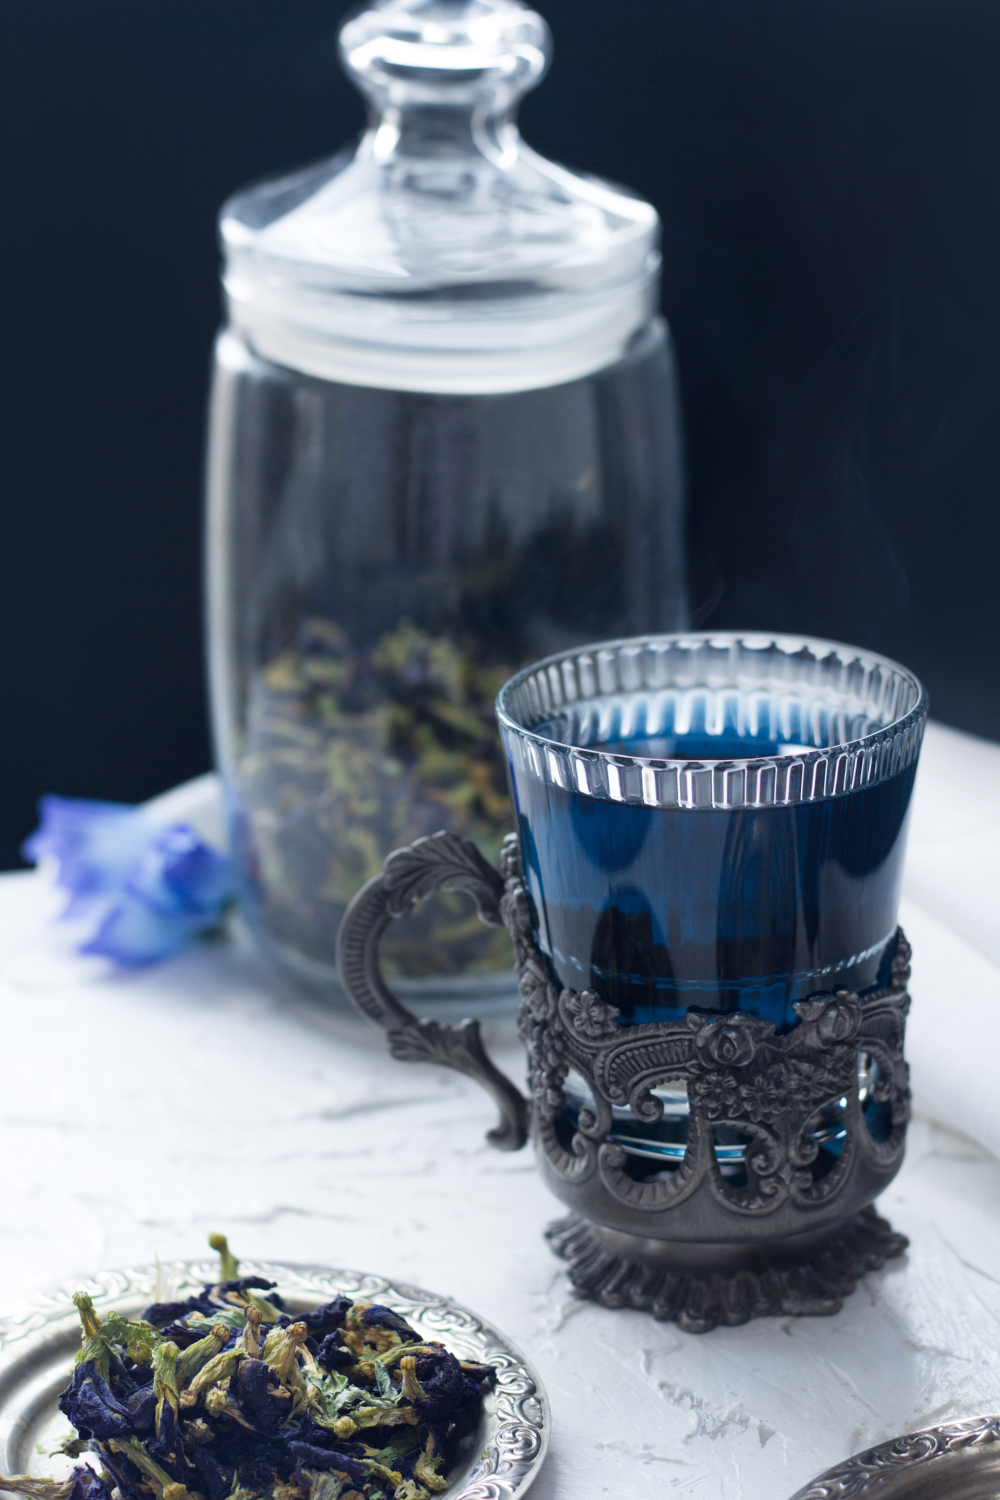 Butterfly pea thai blue tea